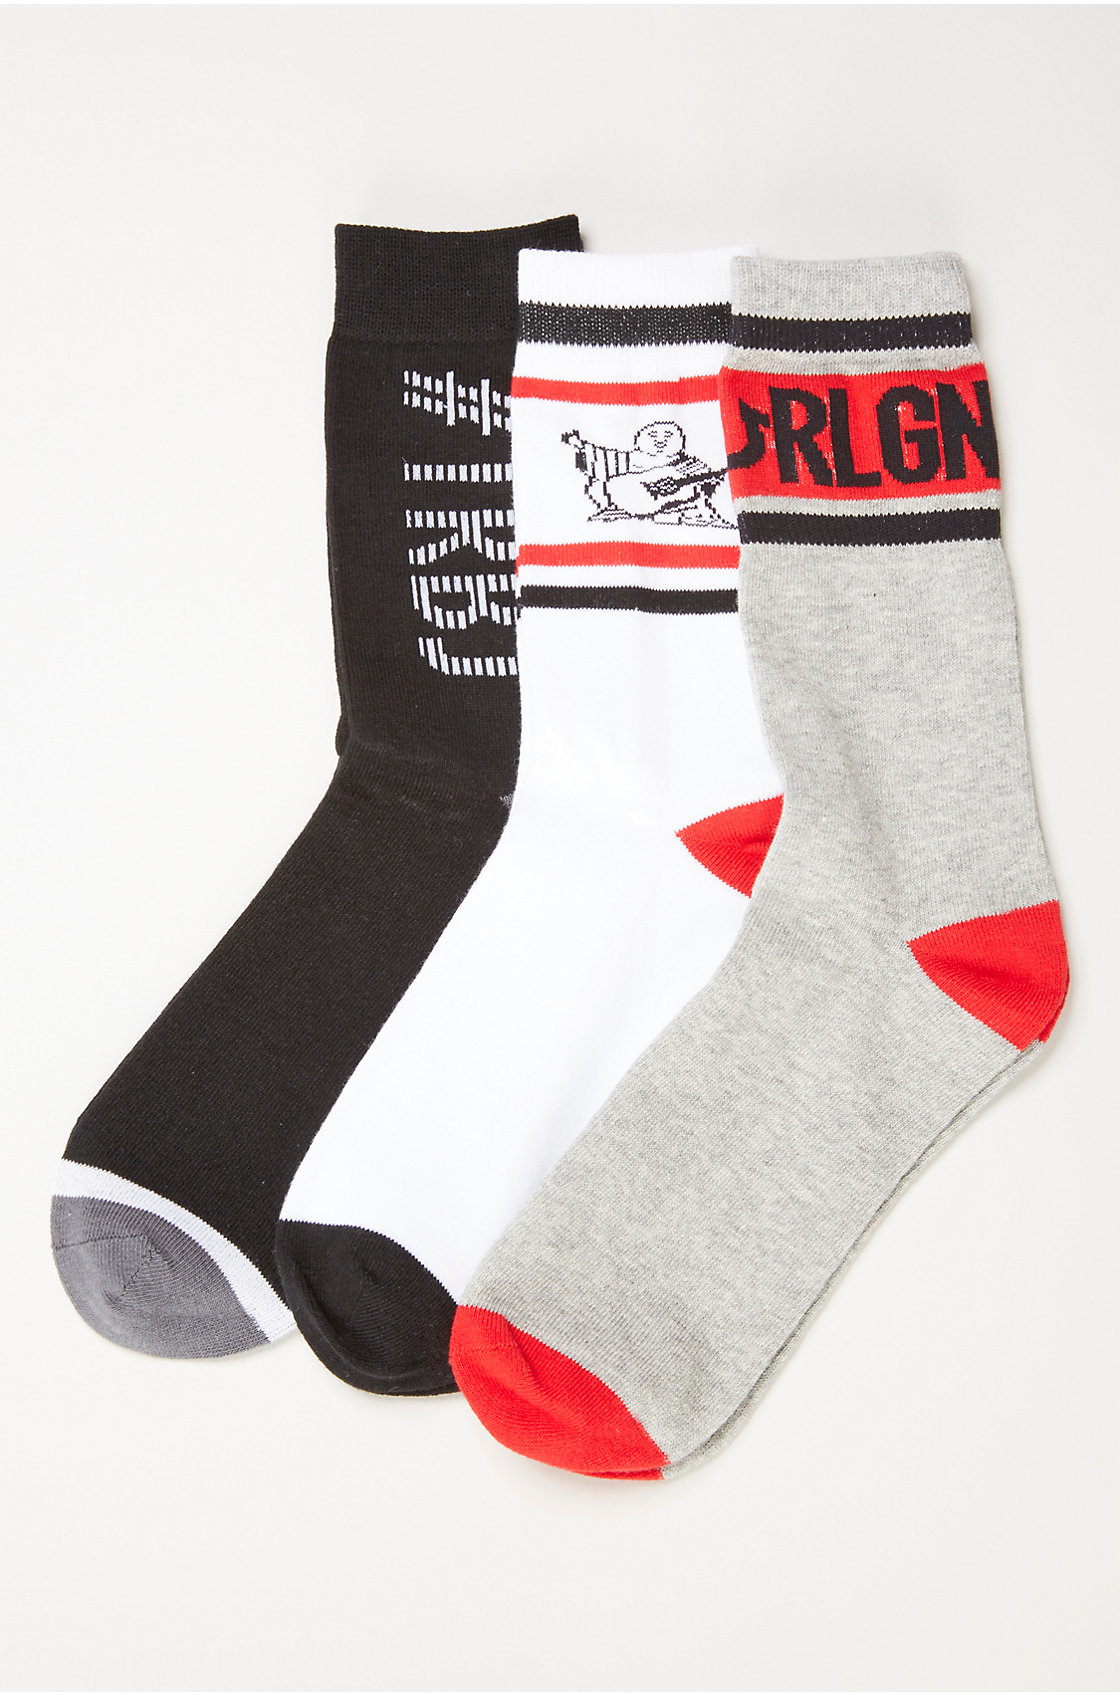 True religion Printed Socks in Multicolor for Men (Assorted ) | Lyst